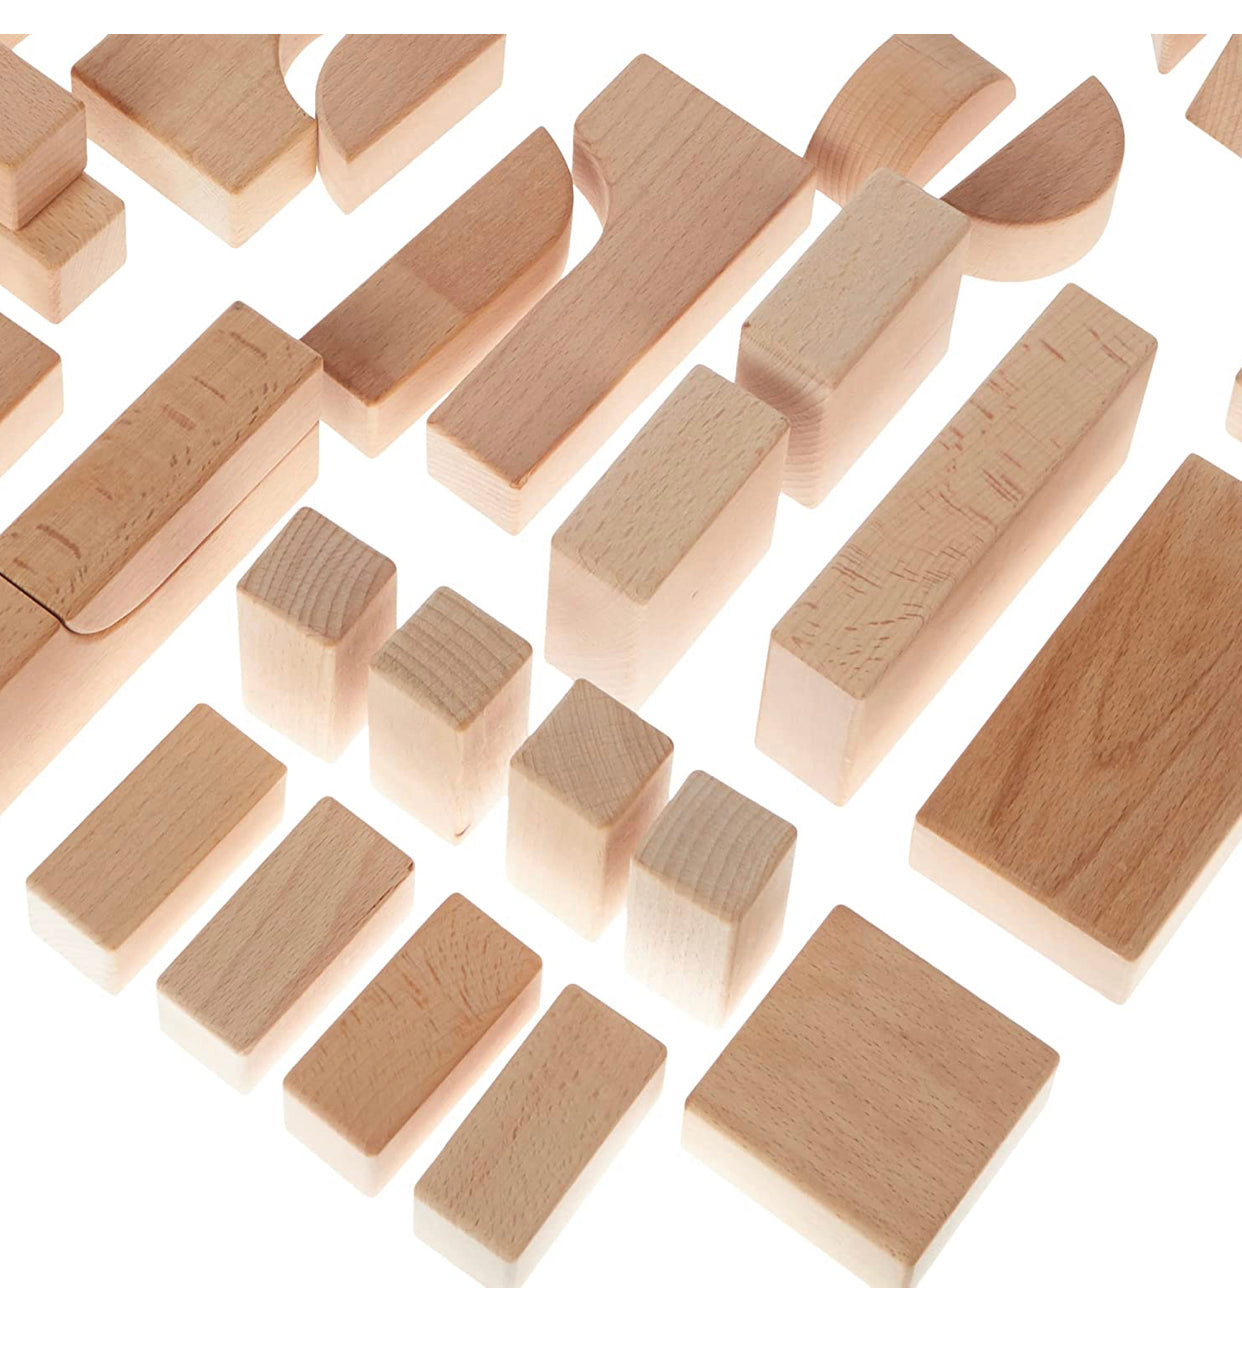 KidKraft 60-piece Wooden Block Set NATURAL